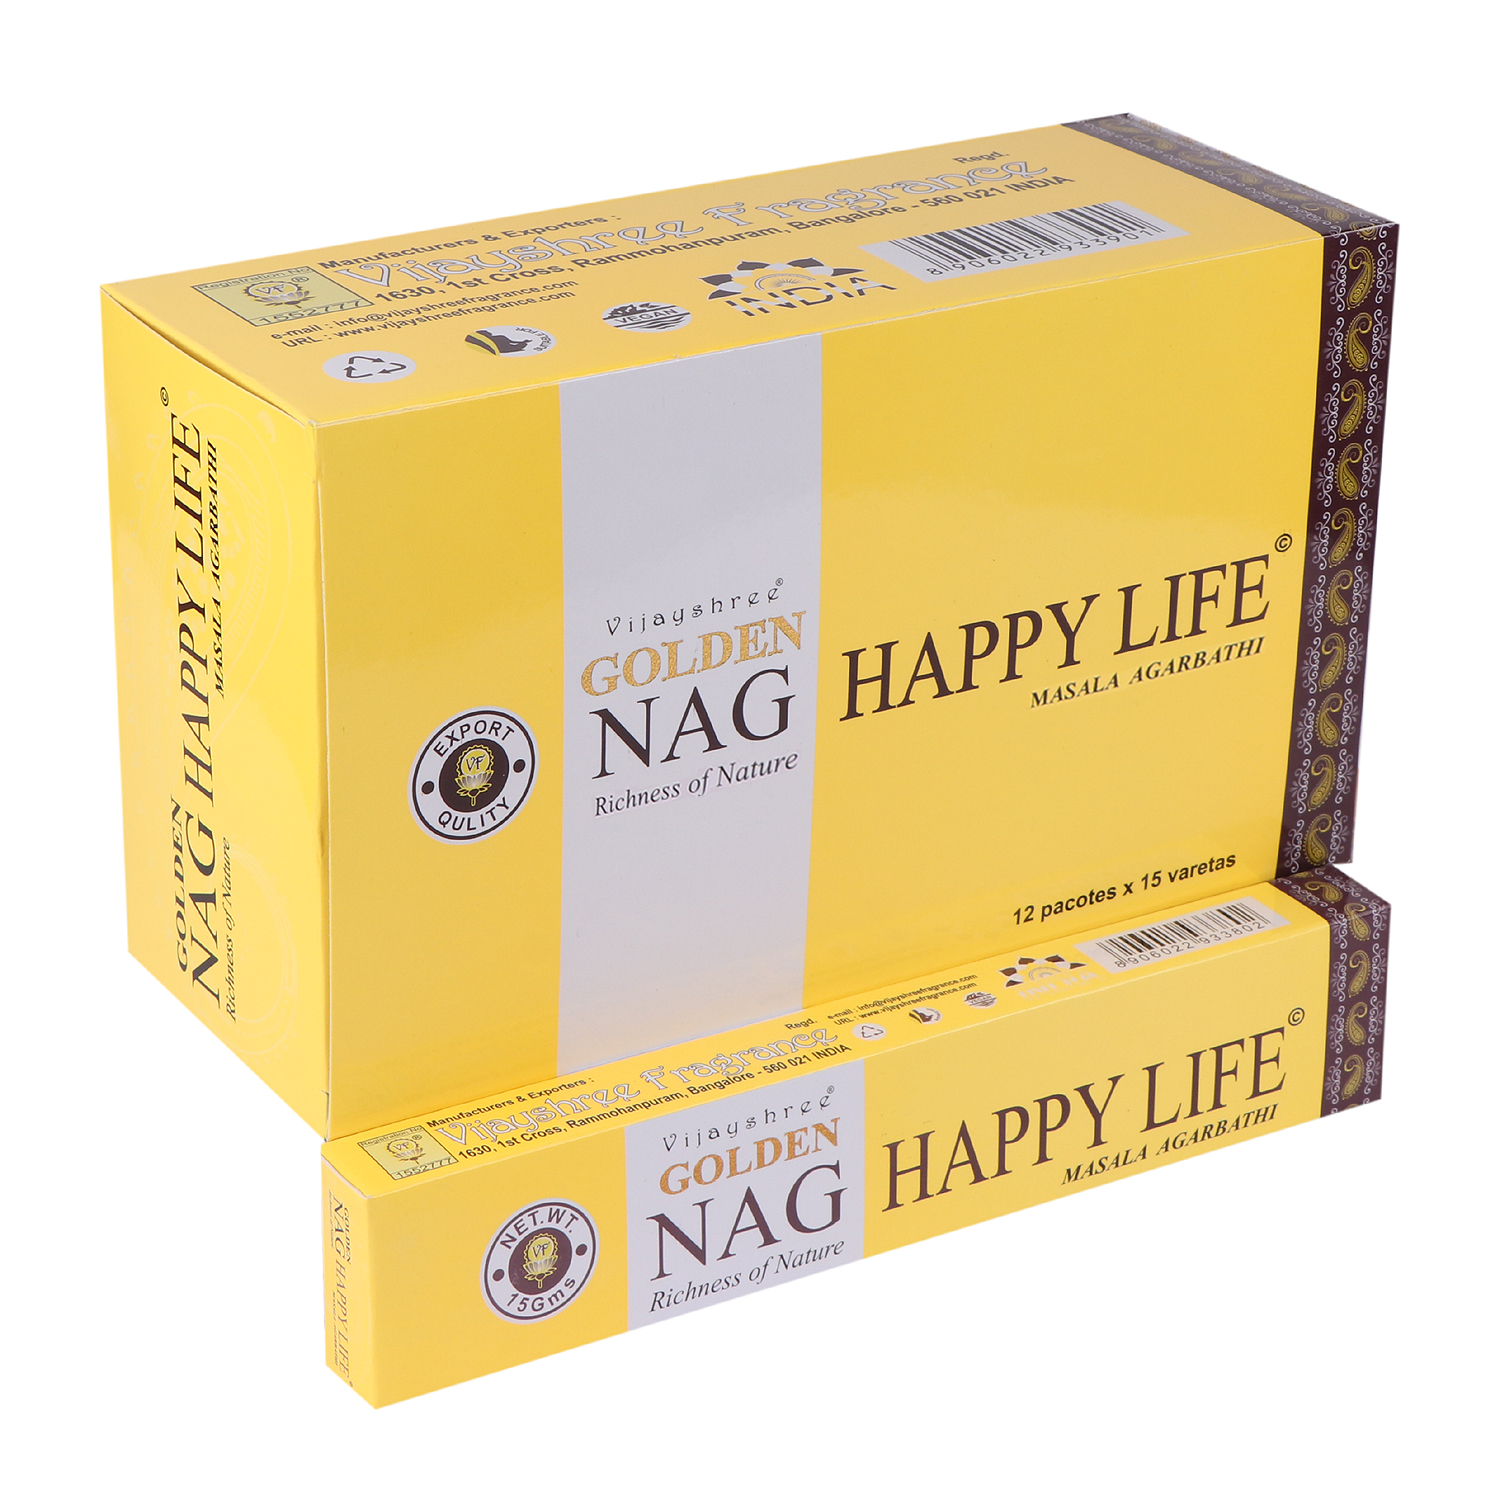 GOLDEN NAG HAPPY LIFE 15 GM